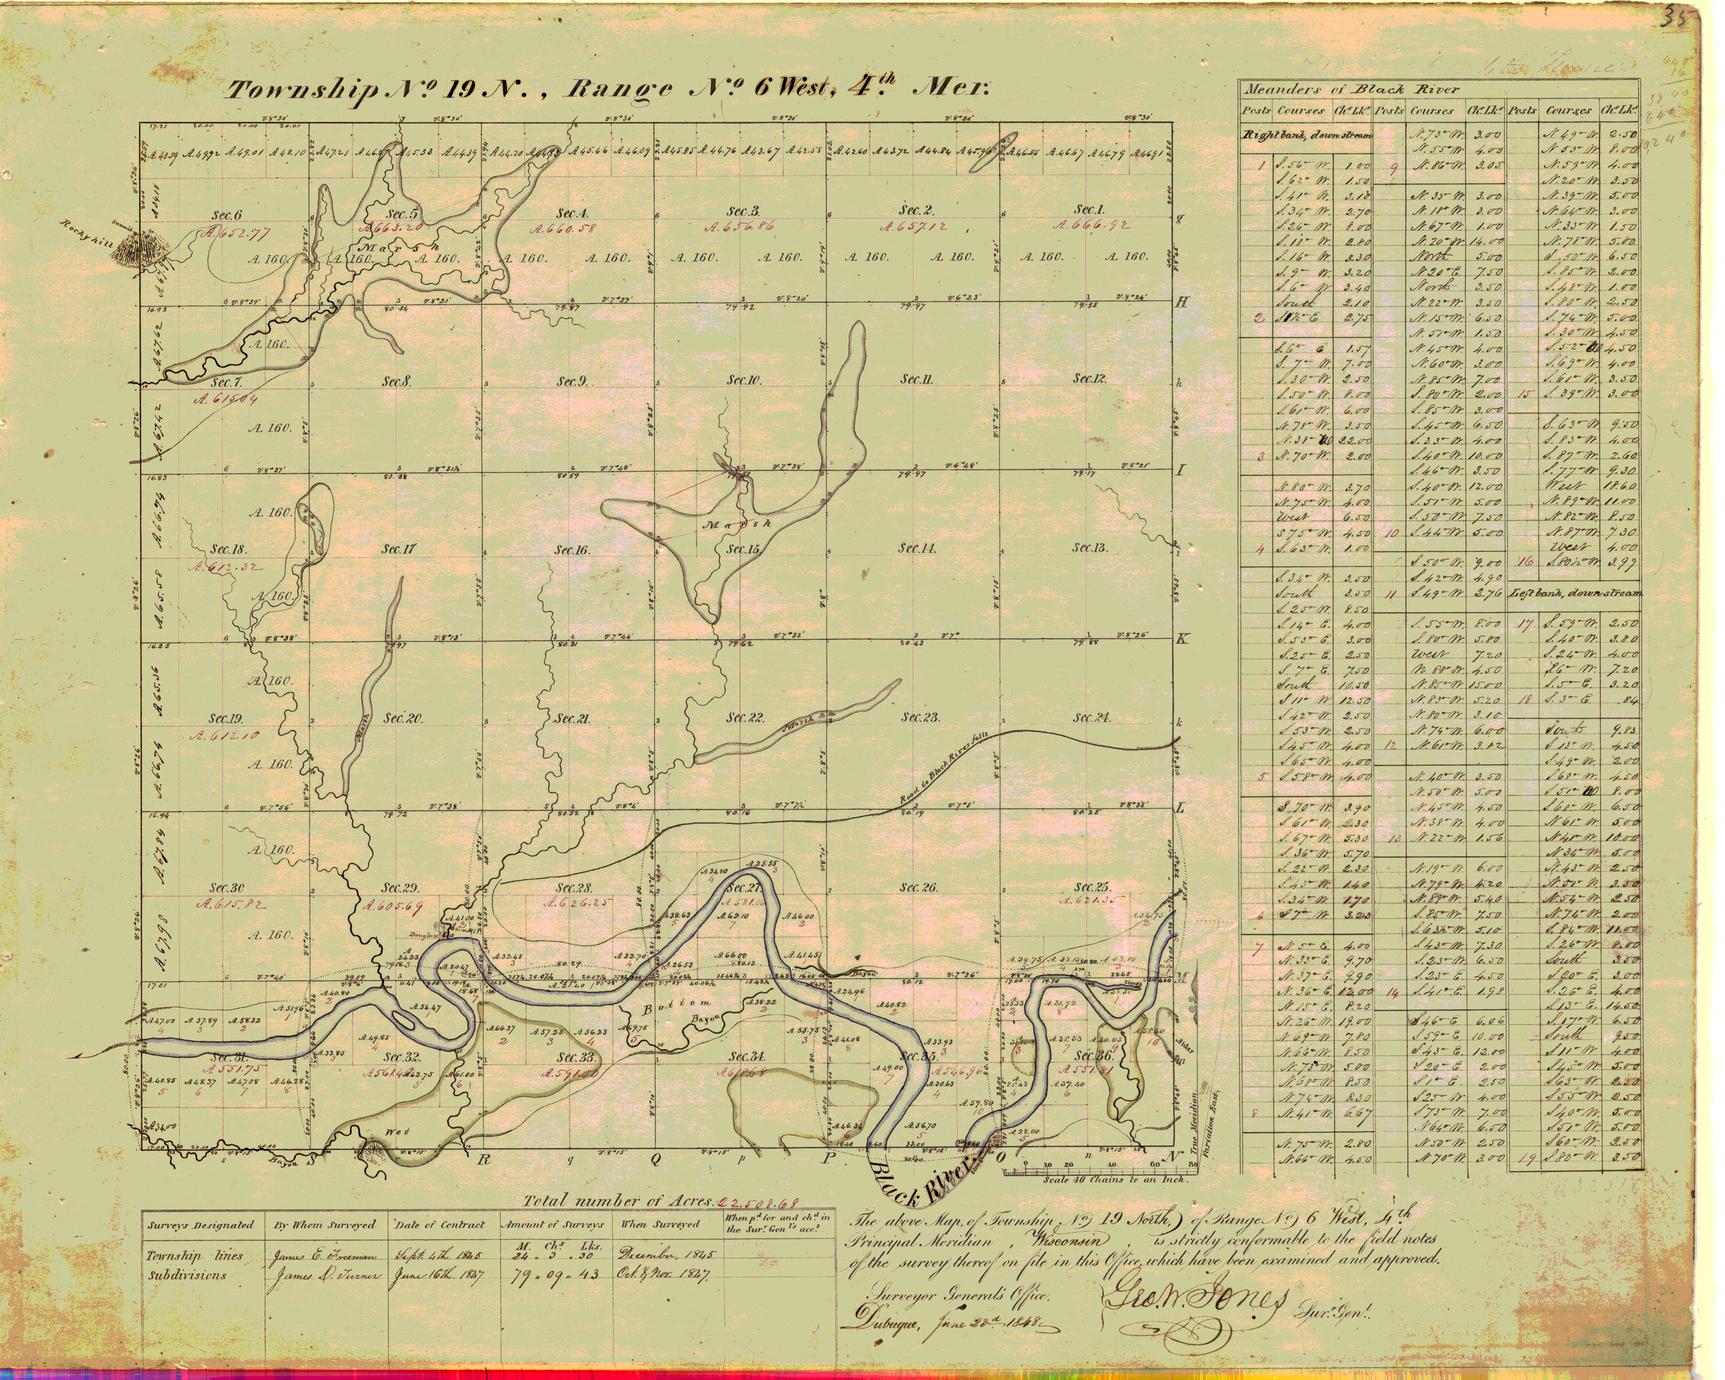 [Public Land Survey System map: Wisconsin Township 19 North, Range 06 West]